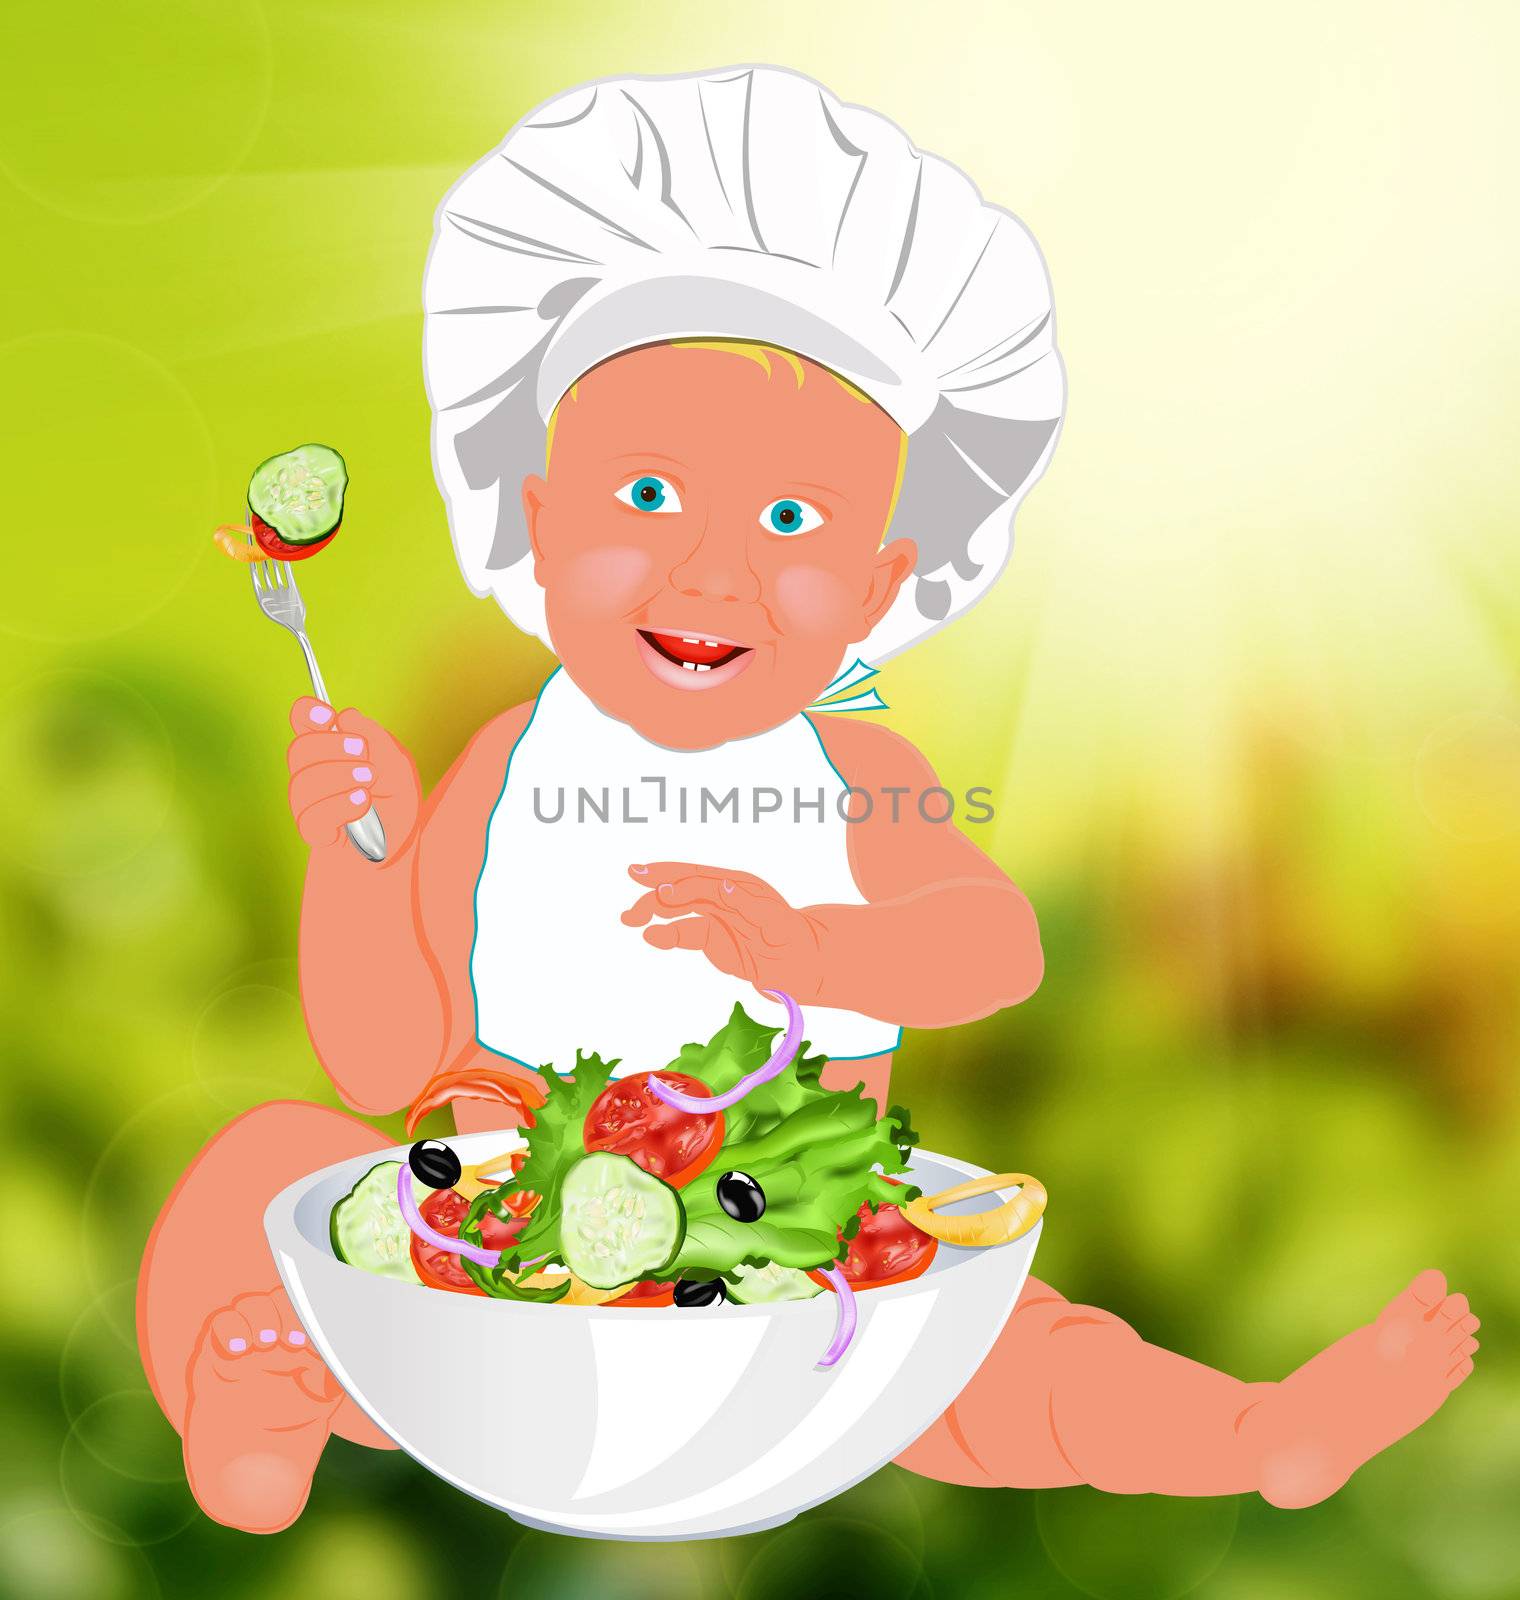 Chef Child and fresh vegetable salad